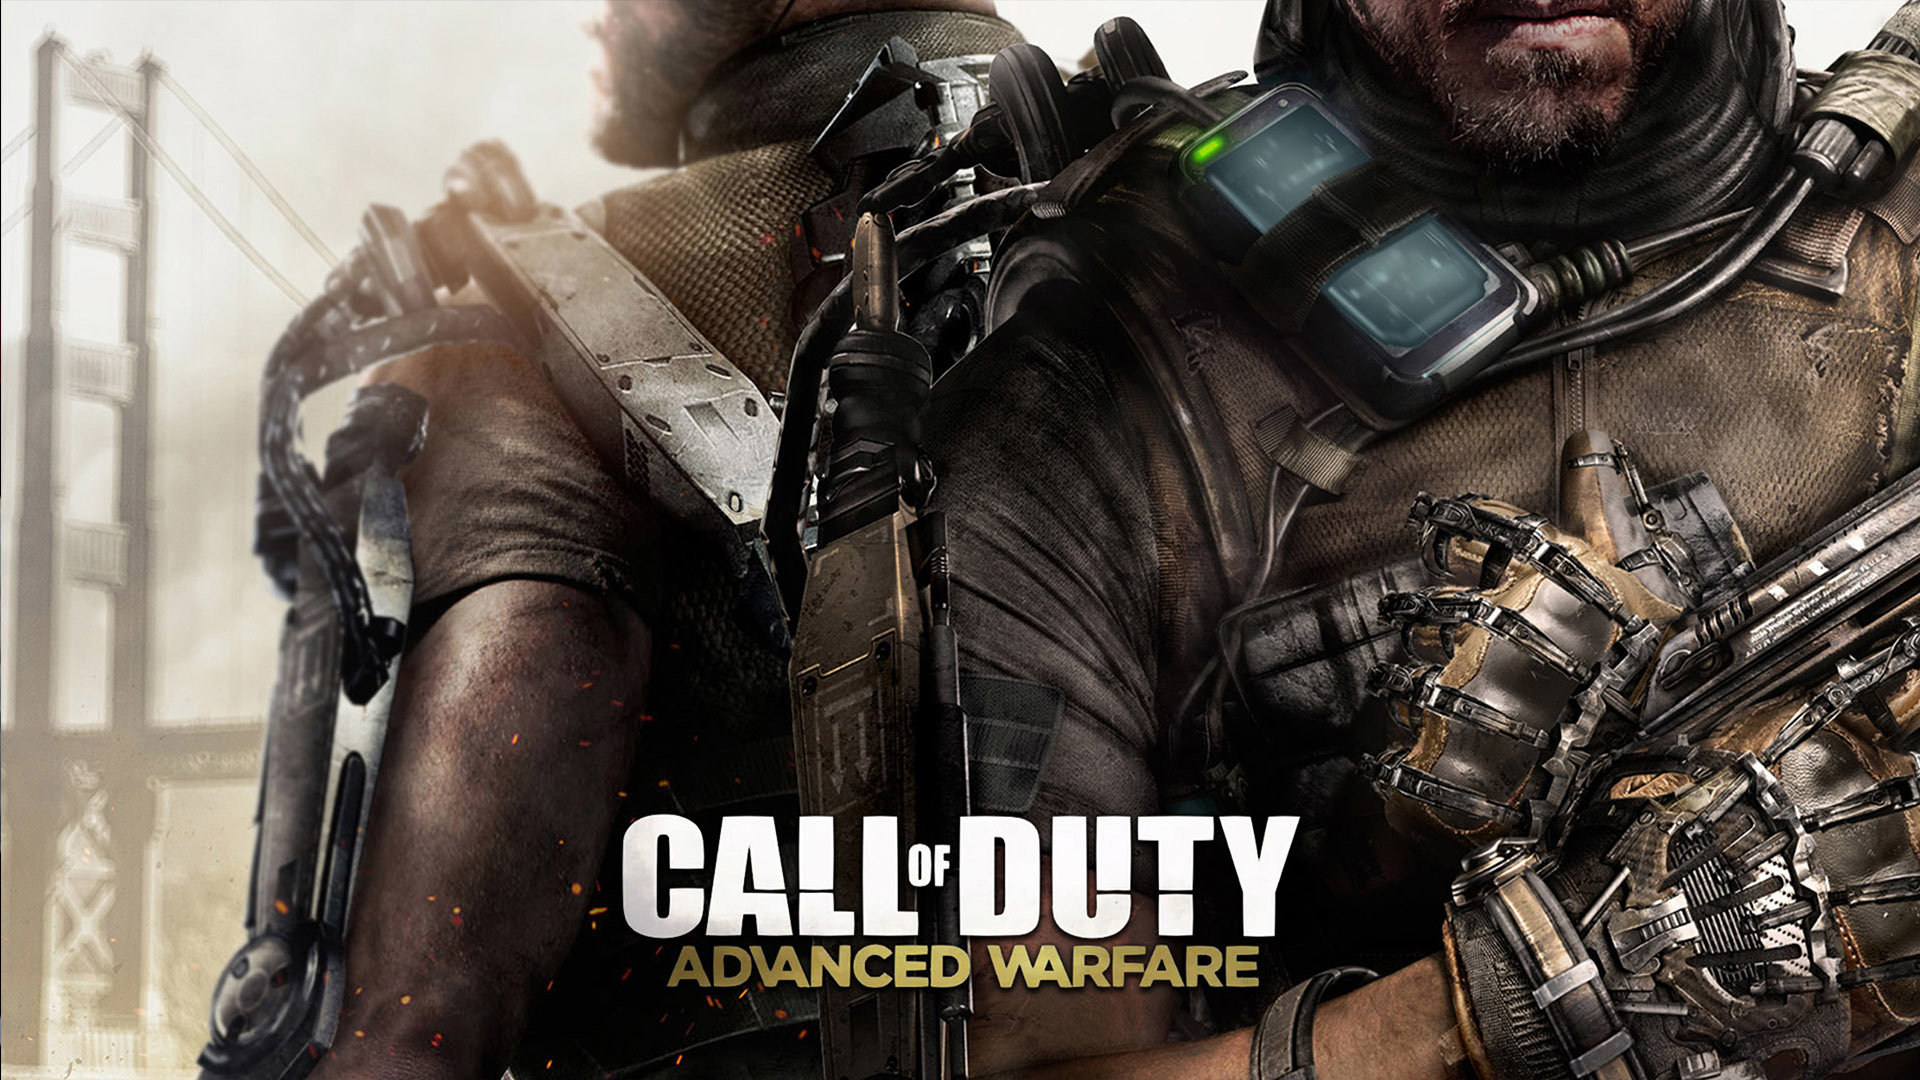 Best Call Of Duty: Advanced Warfare wallpaper ID:315175 for High Resolution hd 1080p PC